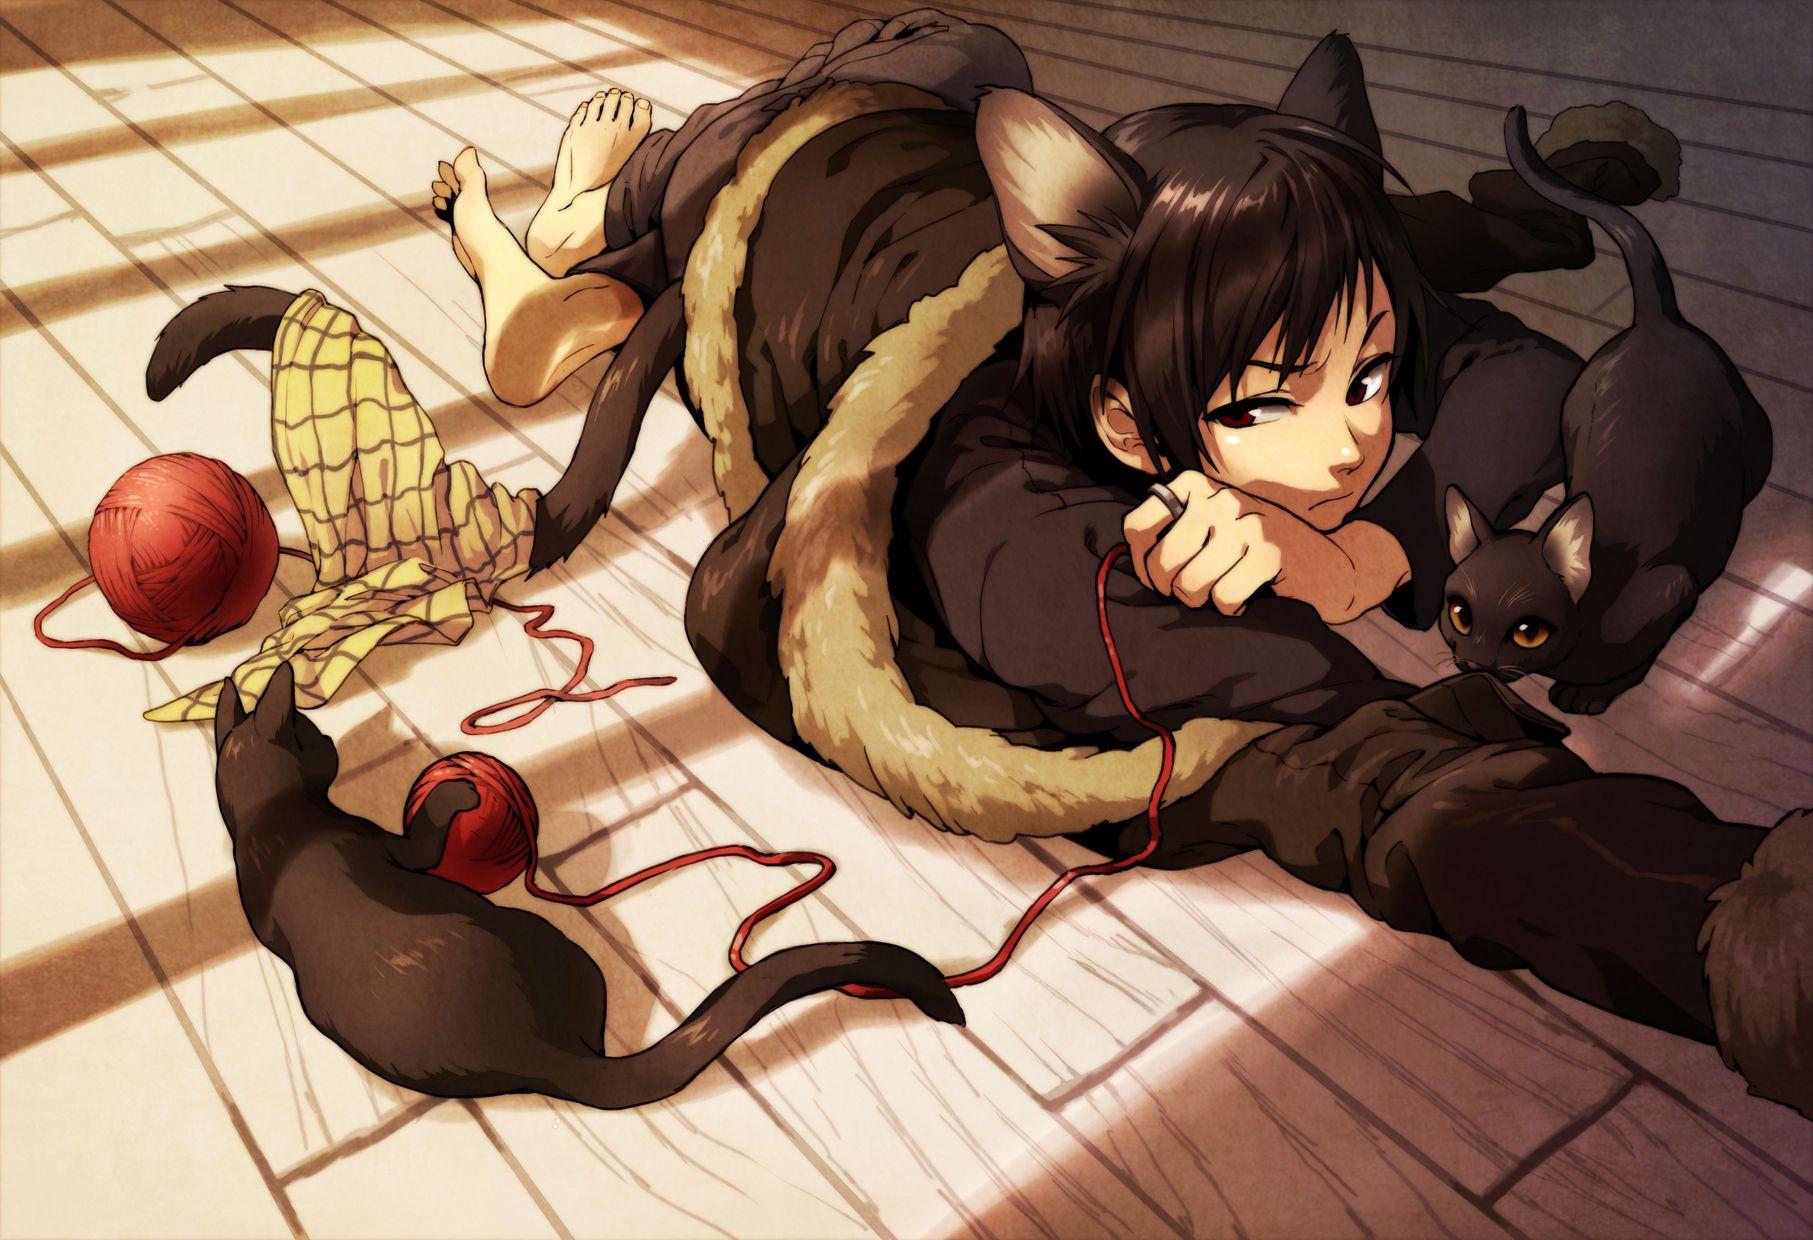 Anime boy and cute cat by peterrustoen on DeviantArt